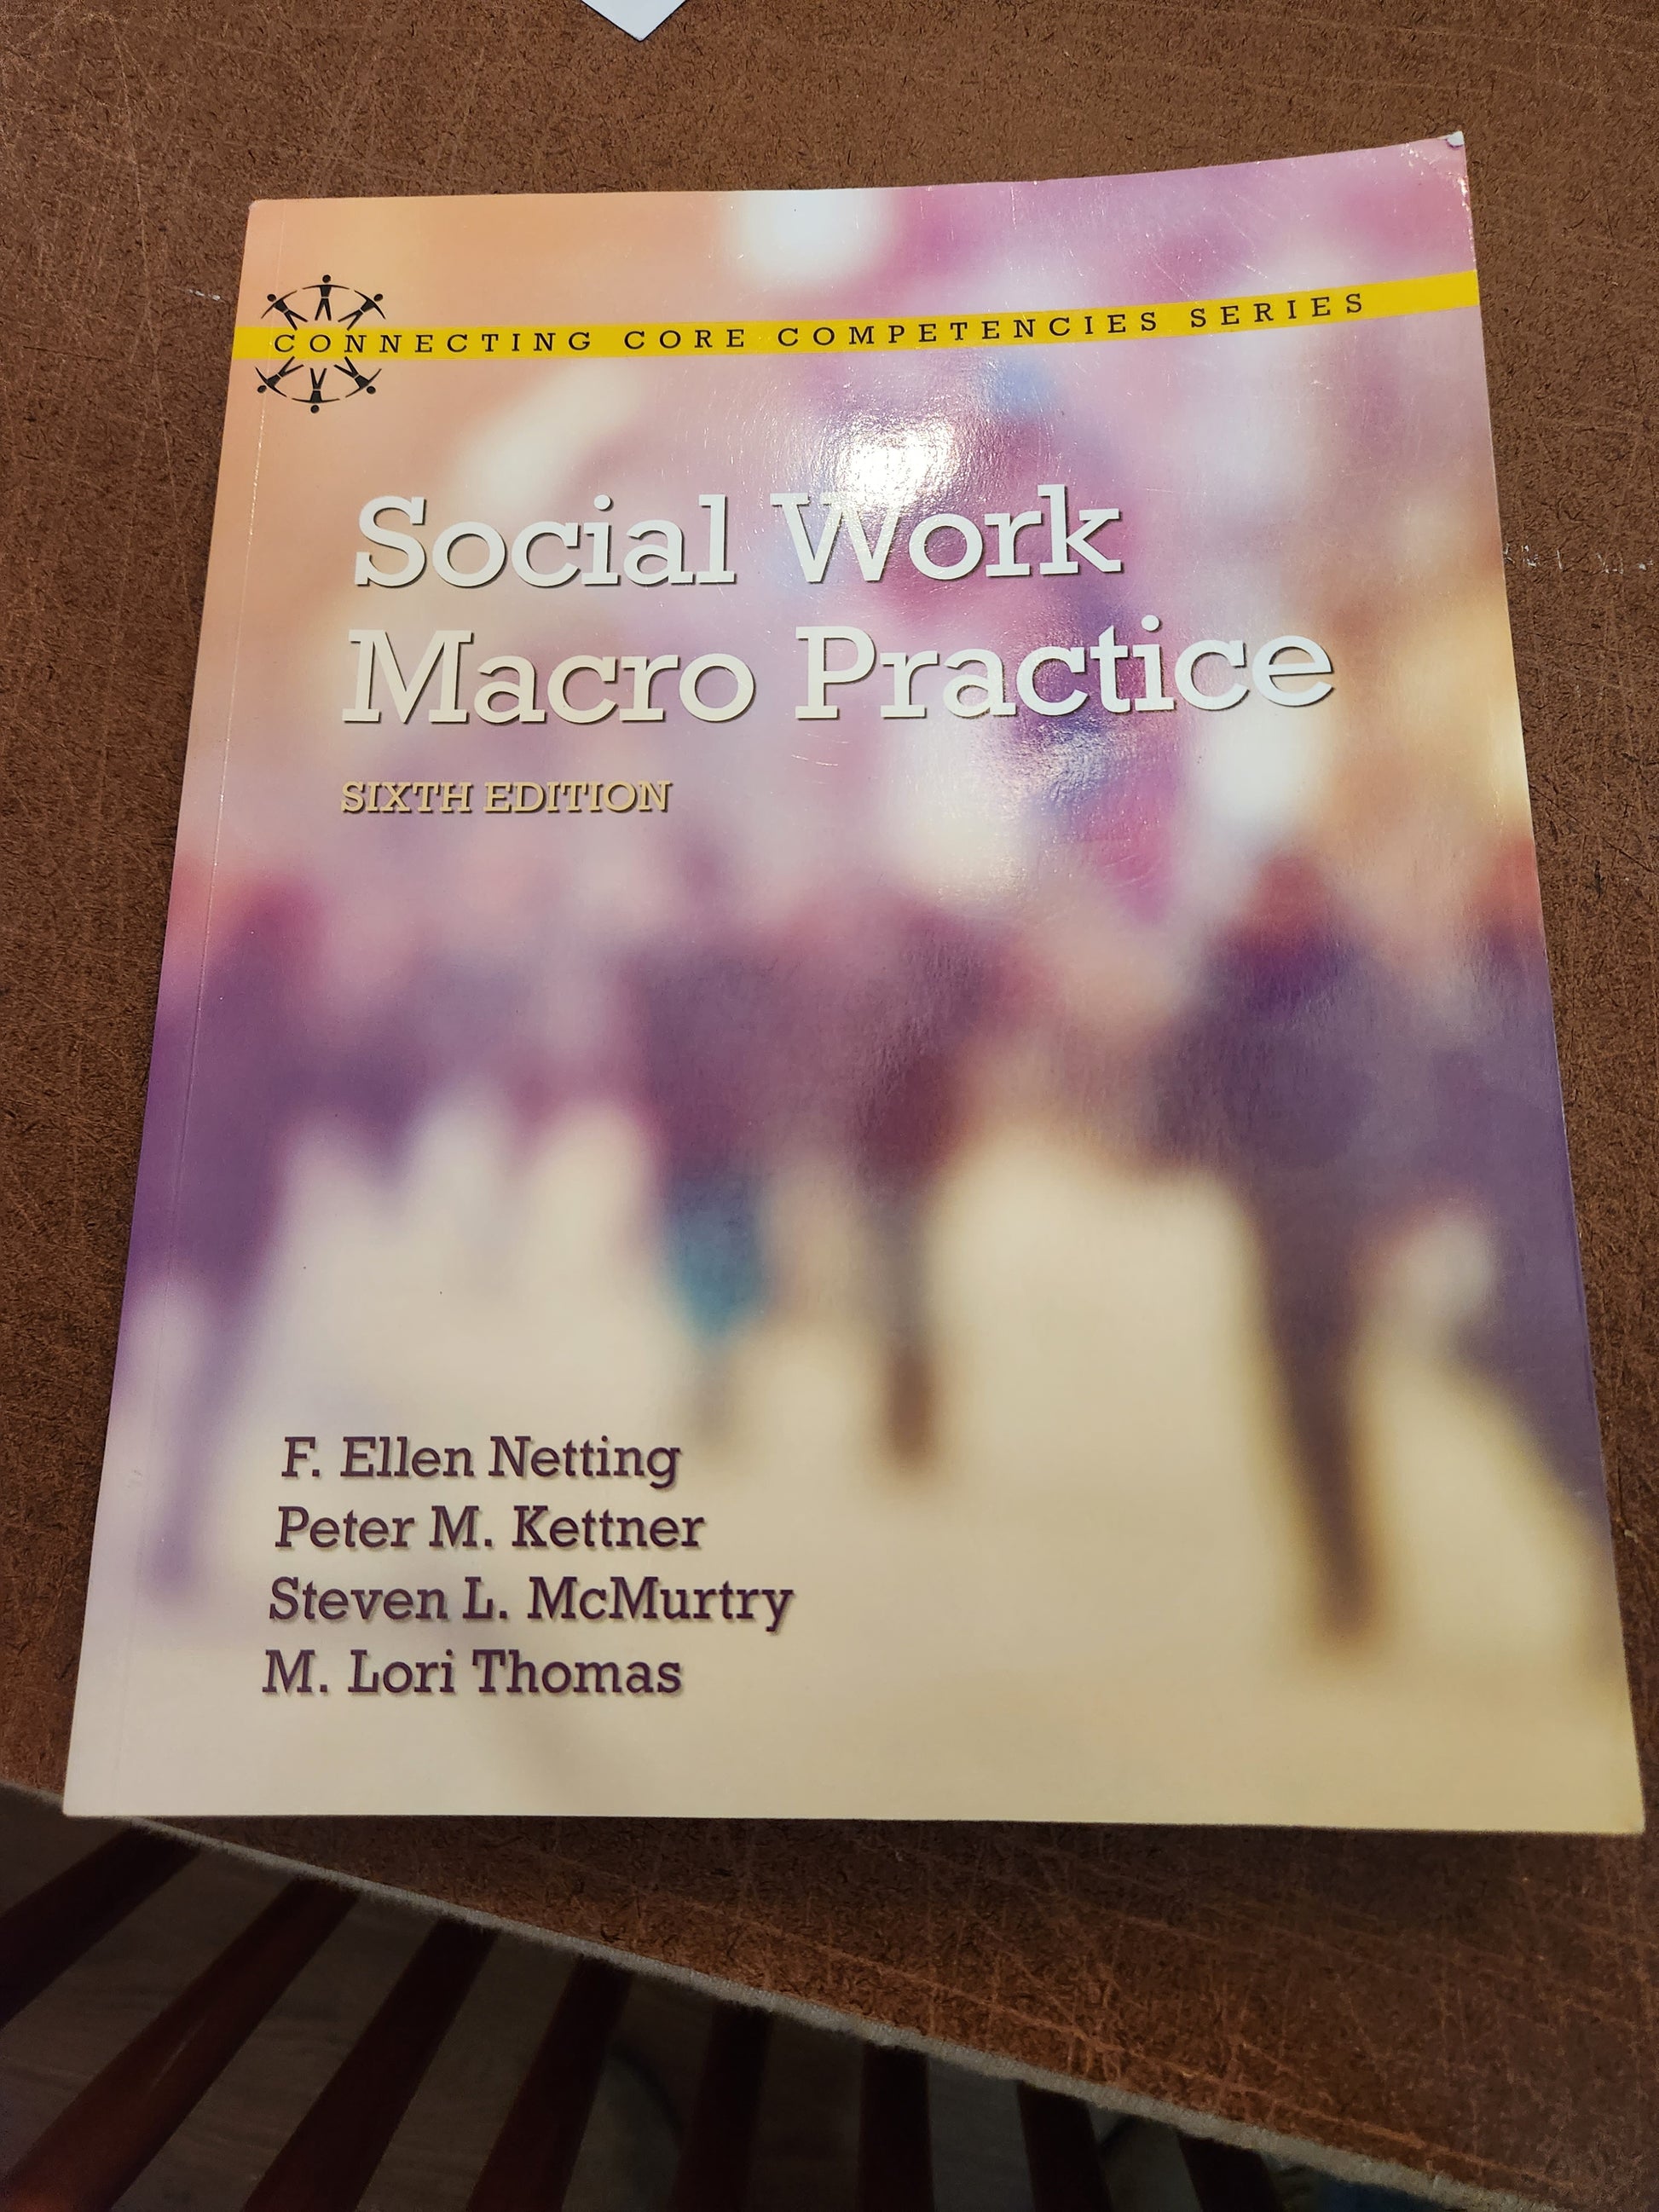 Social Work Macro Practice [Connecting Core Competencies] [ Netting, F. Ellen ] - Dead Tree Dreams Bookstore